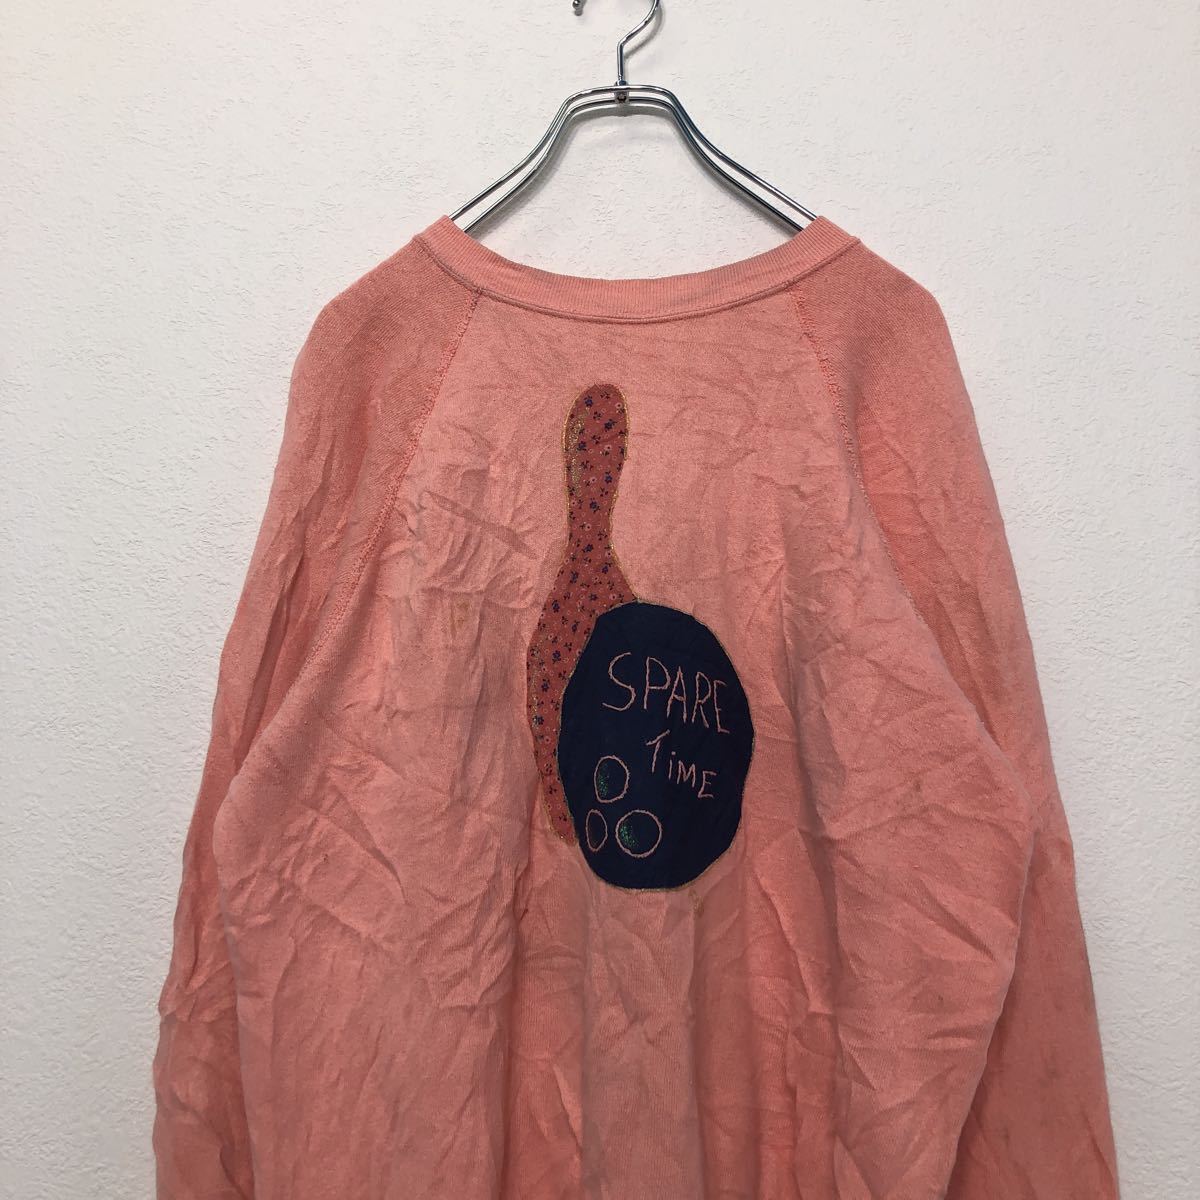 tultex embroidery sweat L pink taru Tec swi men's bo- ring sport la gran sleeve old clothes . America buying up a503-5600